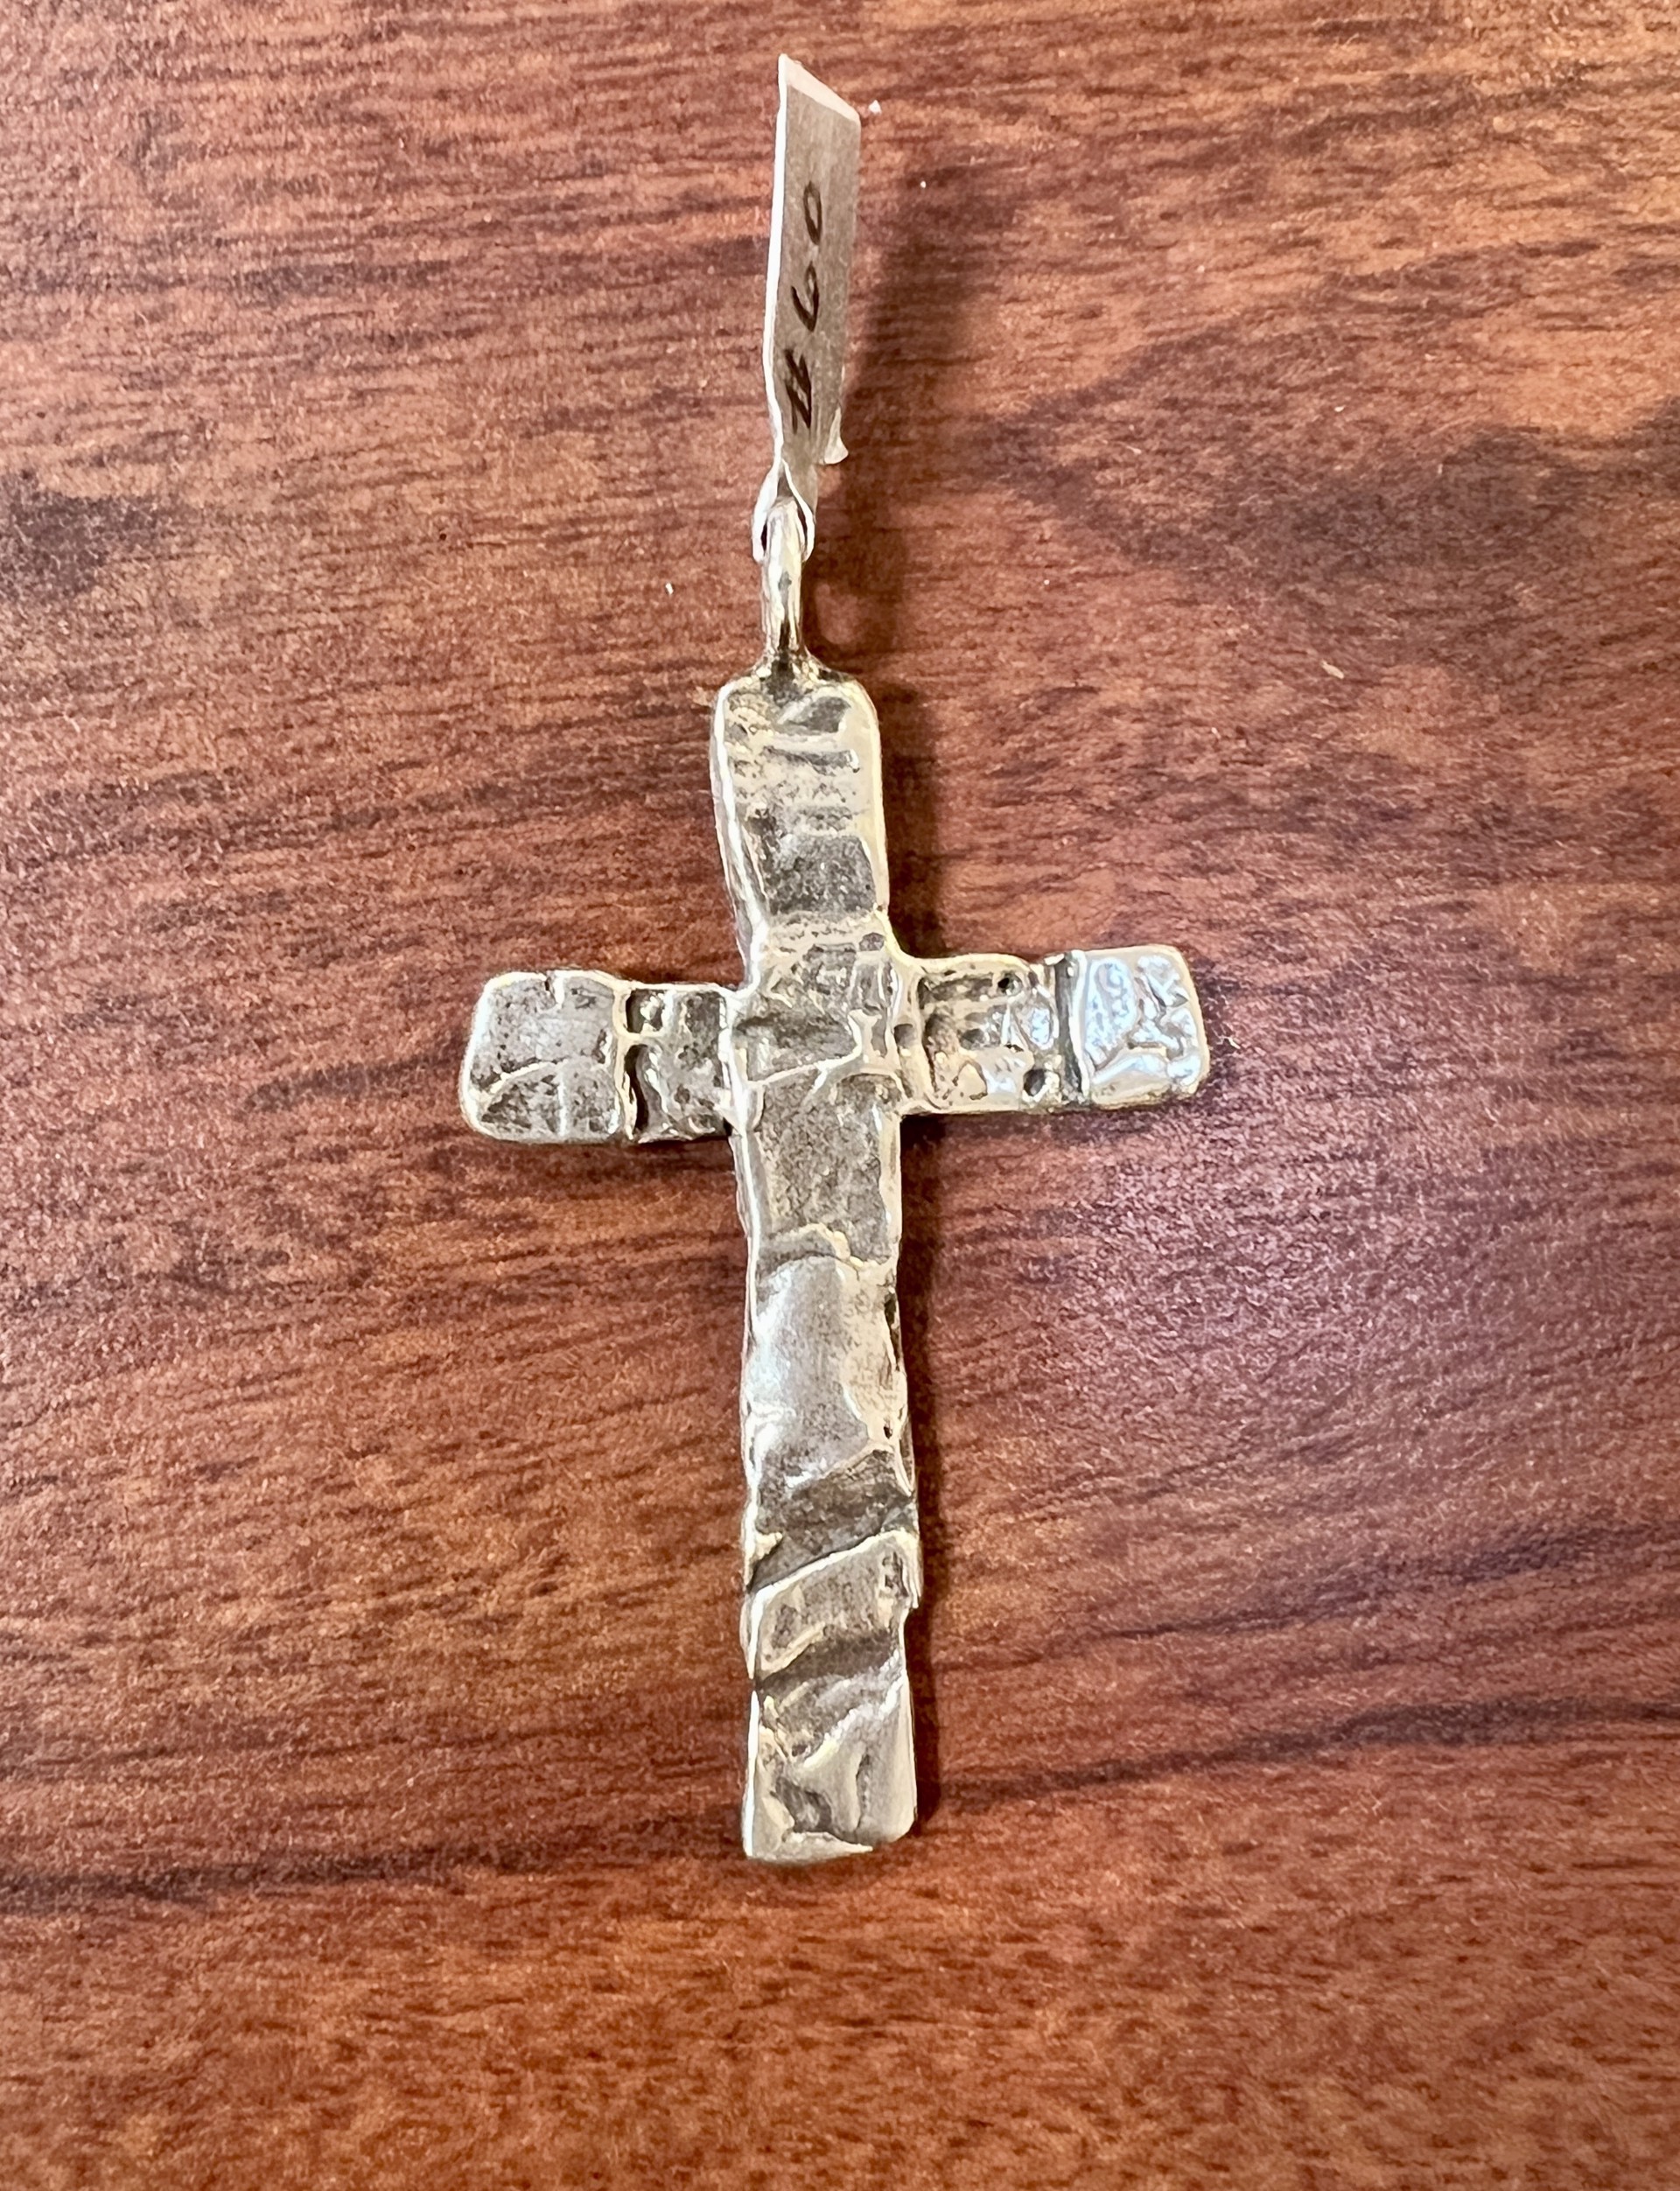 Pendant - Sterling Silver Cross by Indigo Desert Ranch - Jewelry